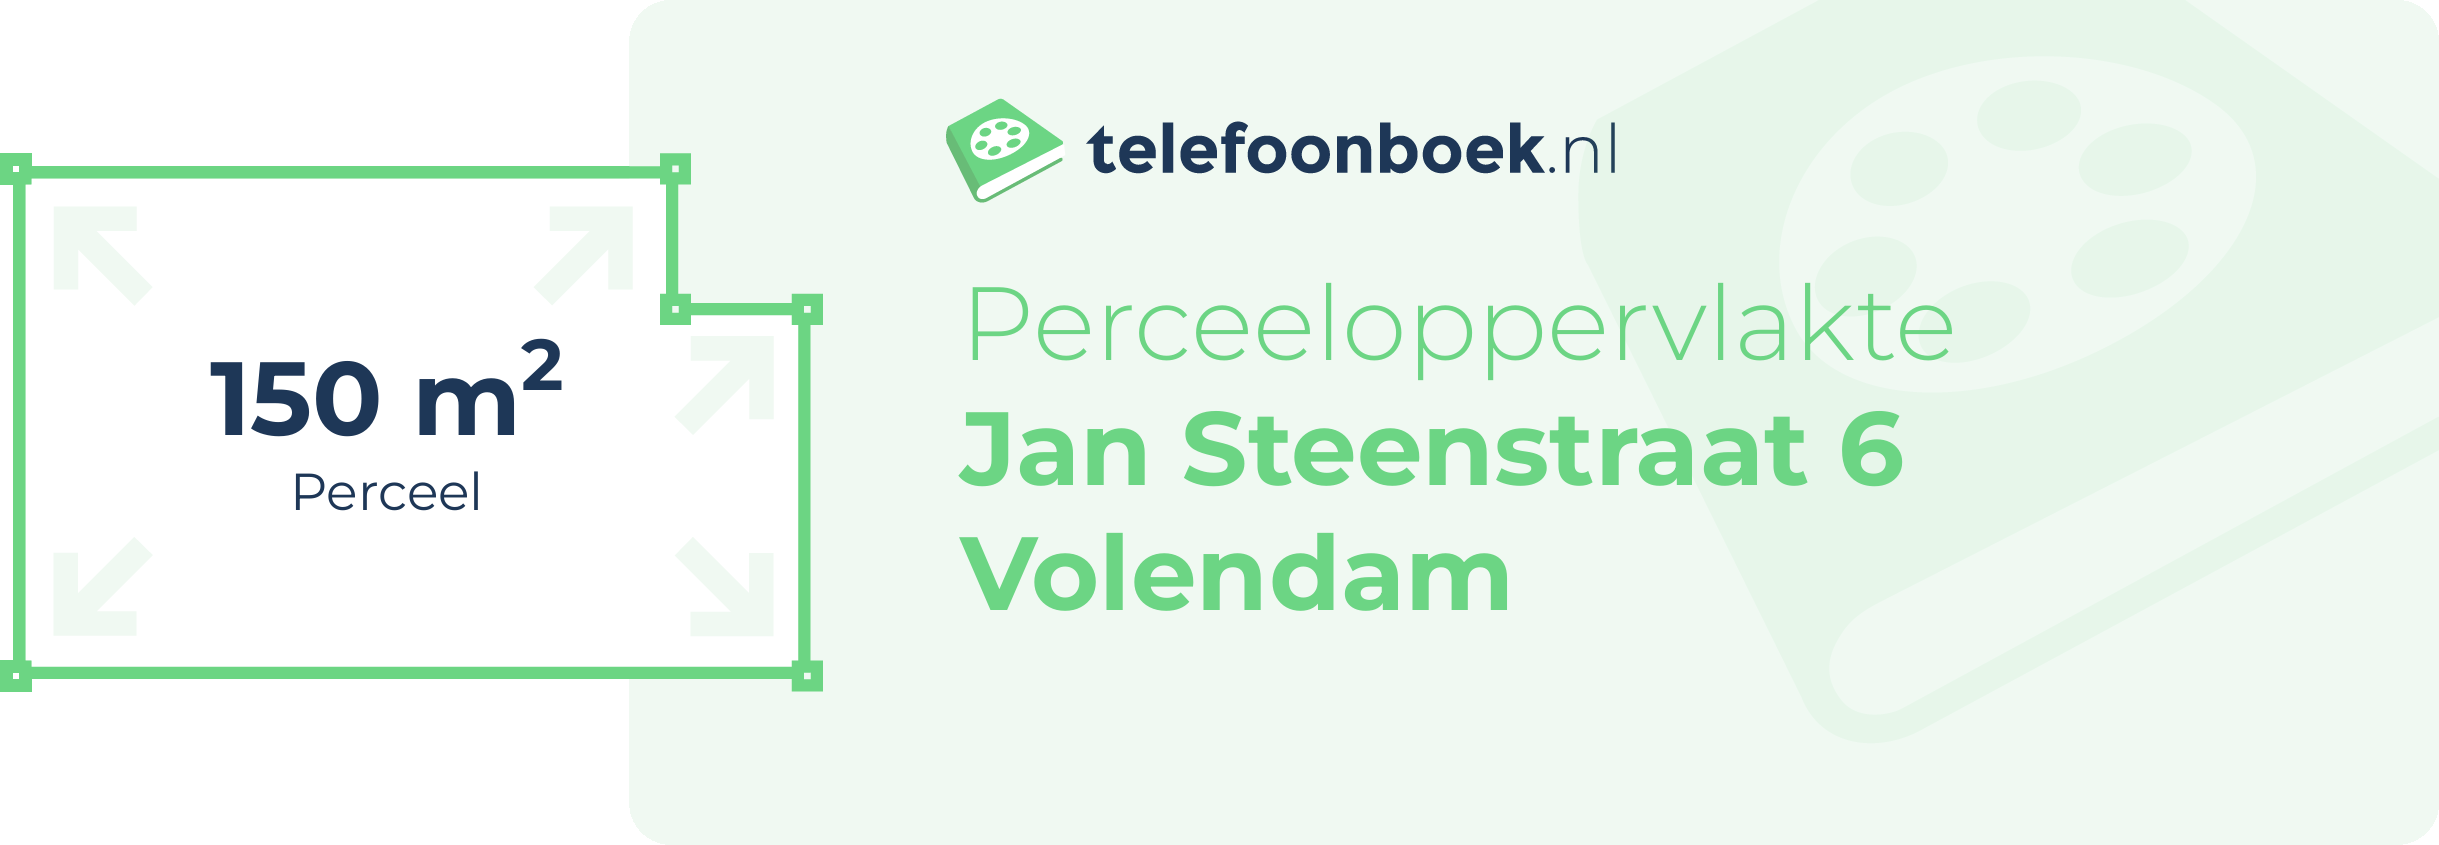 Perceeloppervlakte Jan Steenstraat 6 Volendam